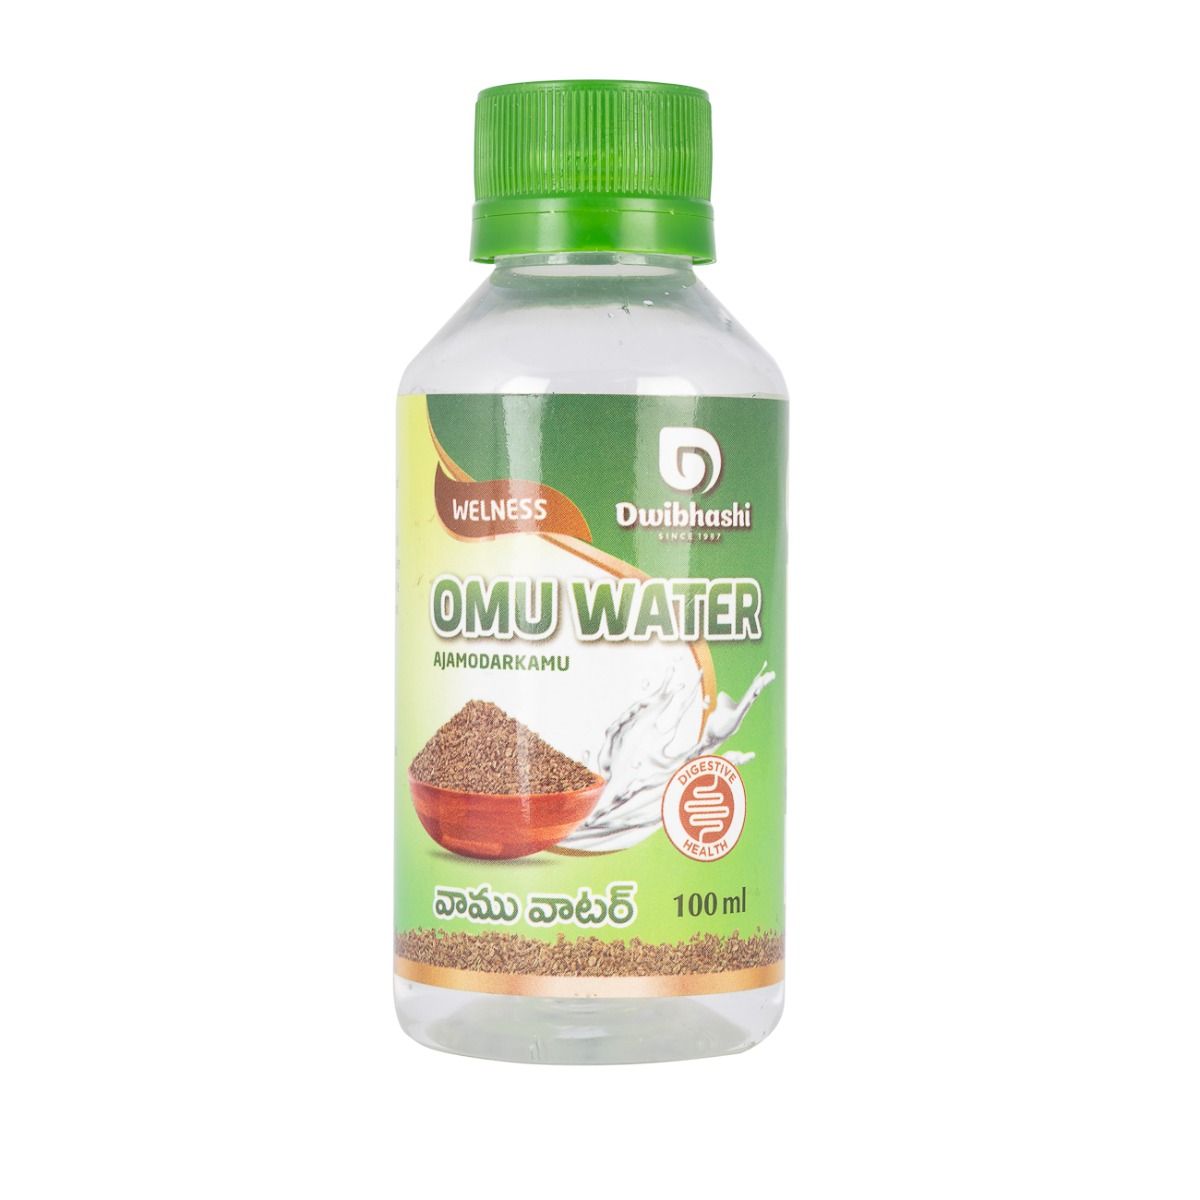 Spl Omu Water, 100 ml, Pack of 1 